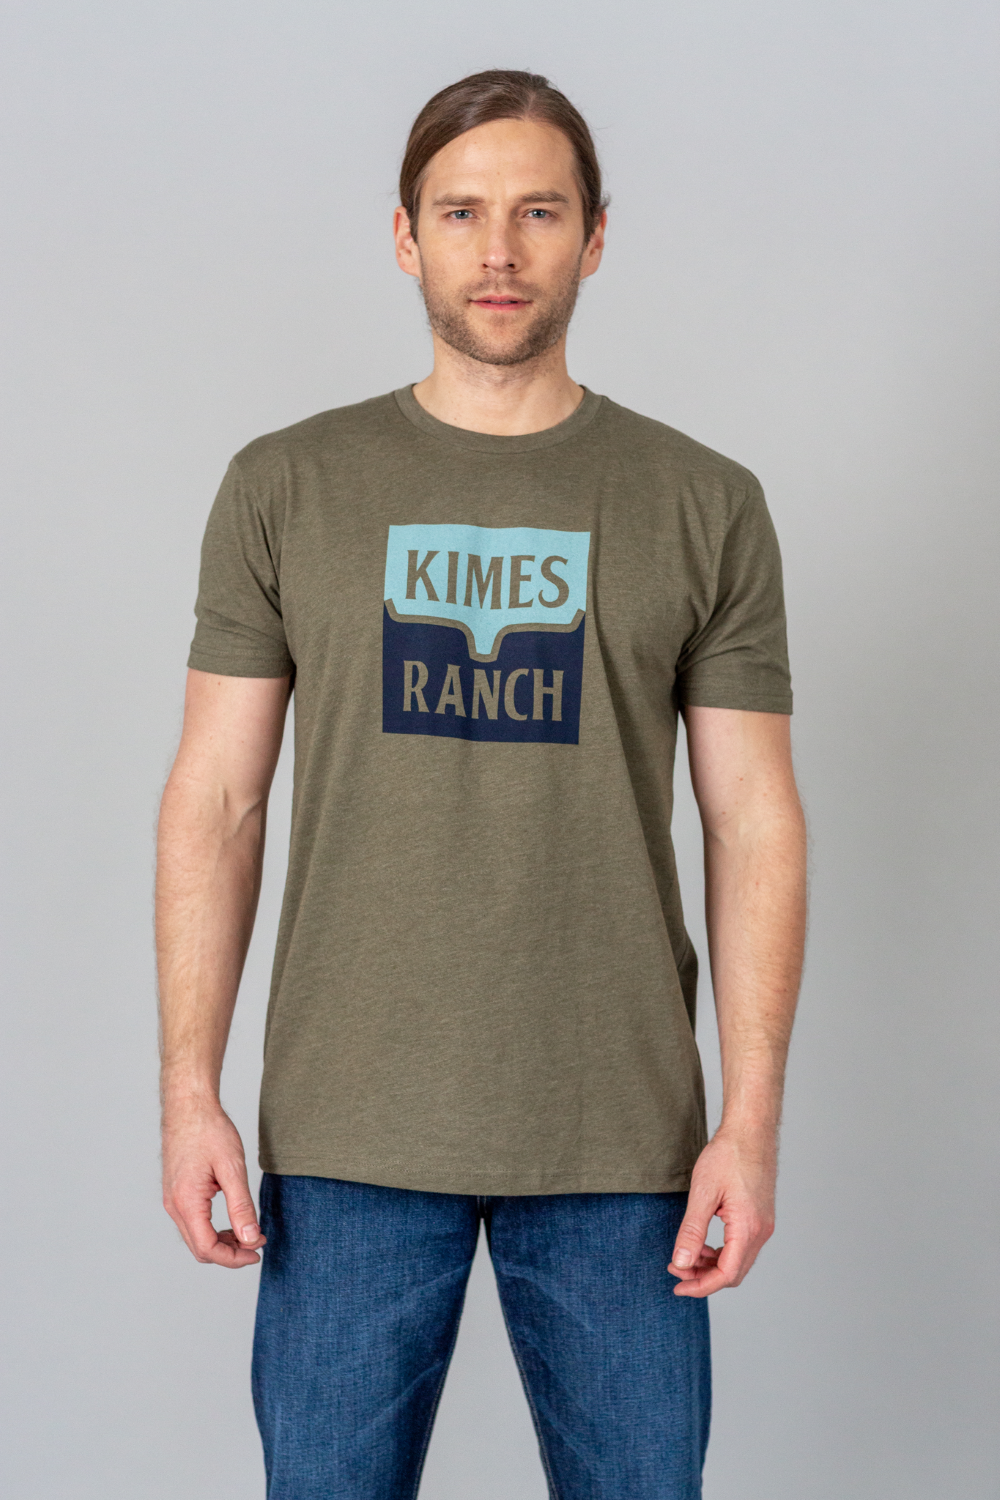 'Kimes Ranch' Men's Explicit Warning Tee - Military Green